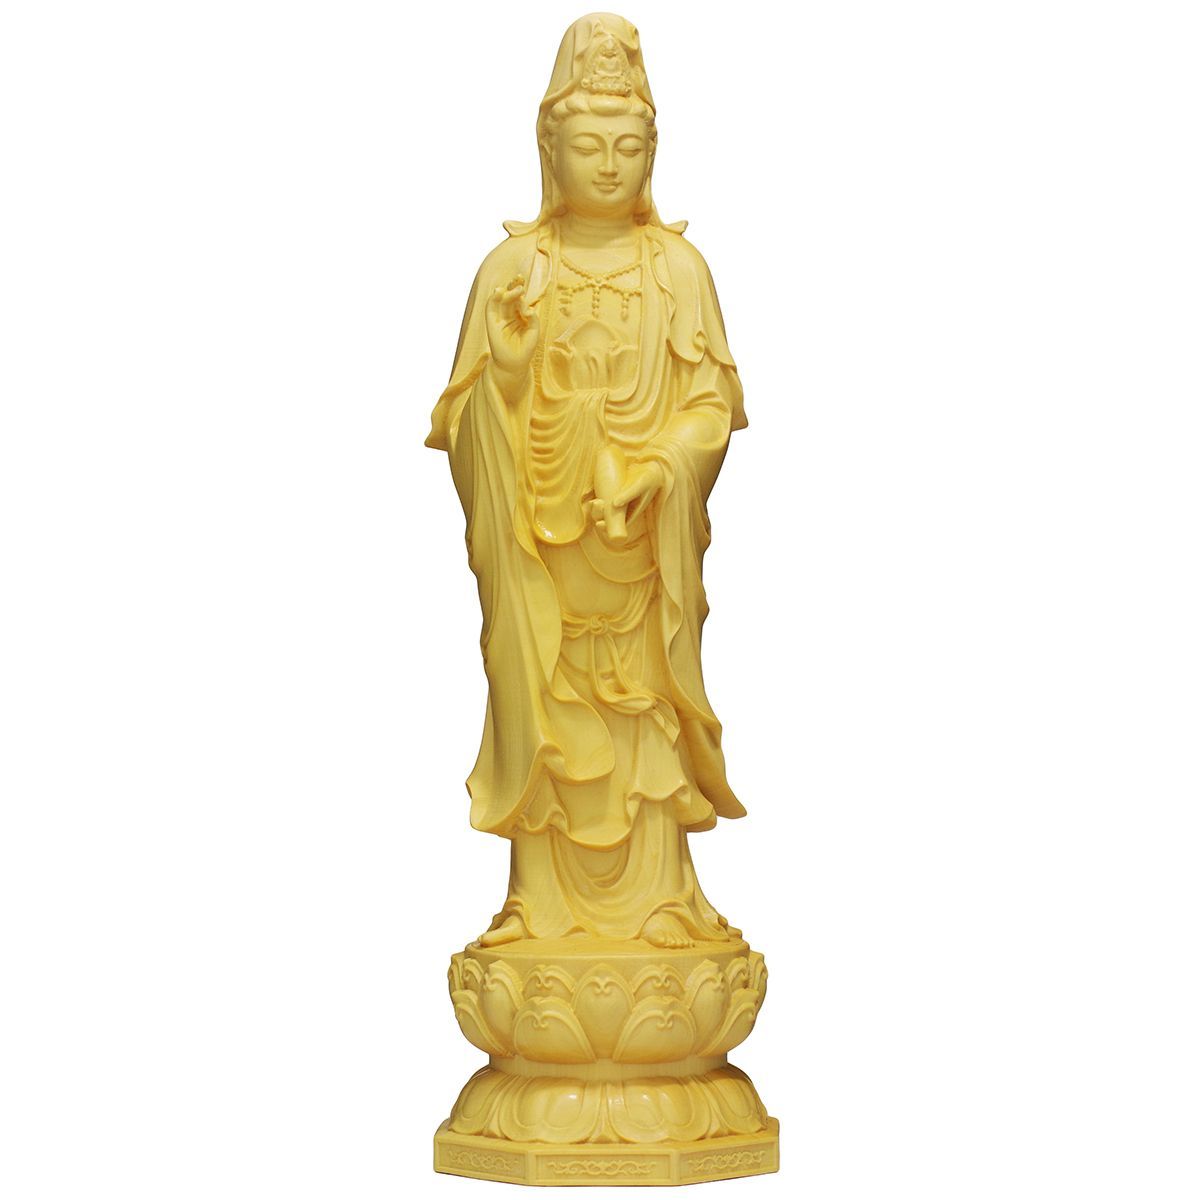 【HAMMARS】 観音菩薩立像 20cm 天然木製 (柘植ツゲ) 観音像 木彫仏像